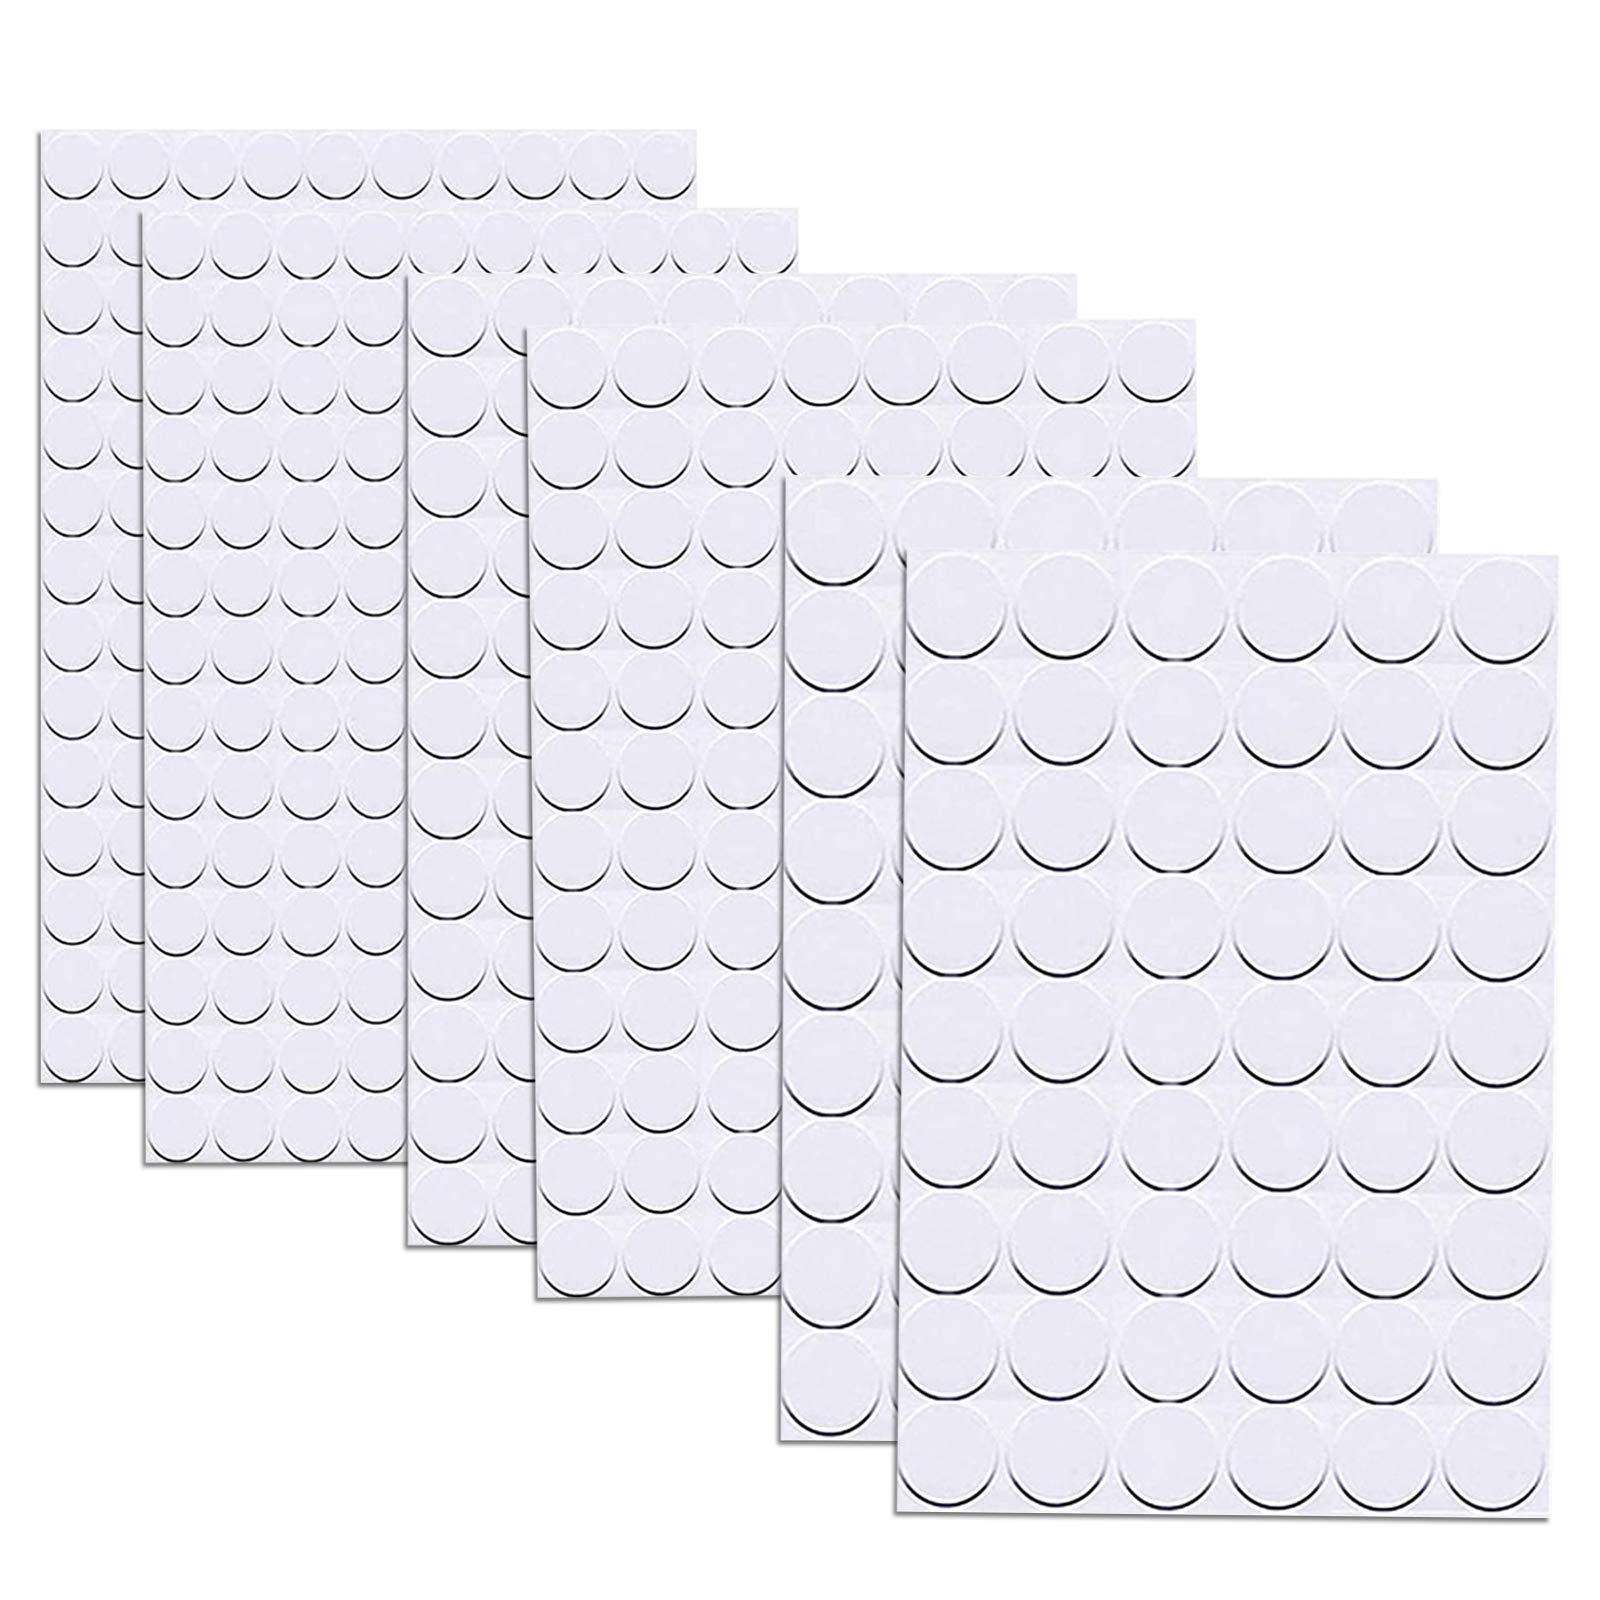 ROMEDA 580 Pcs Self-Adhesive Screw Hole Stickers, 6-Table Self-Adhesive Screw Covers Caps Dustproof Sticker 12mm, 15mm, 21mm White